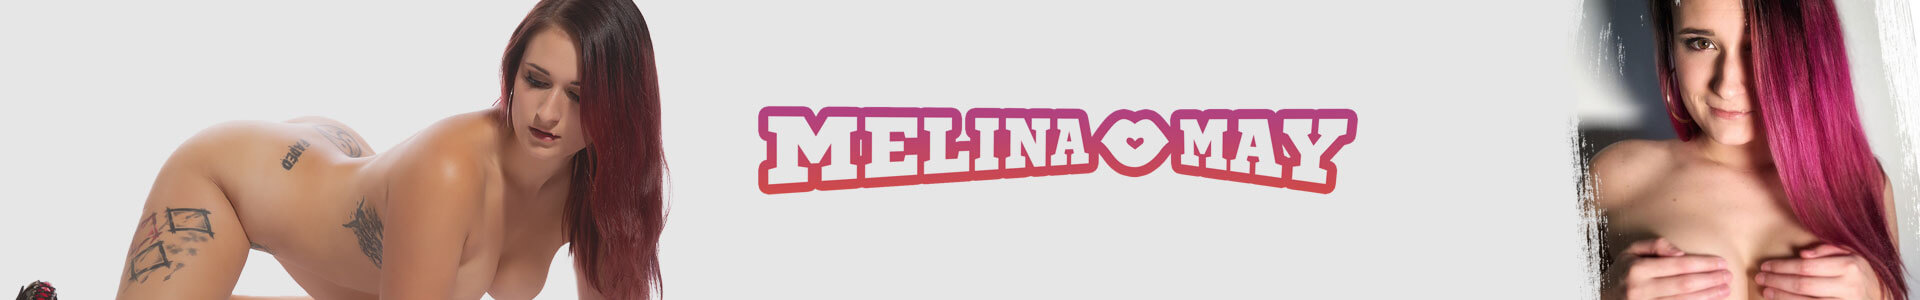 Melina May Porno Videos